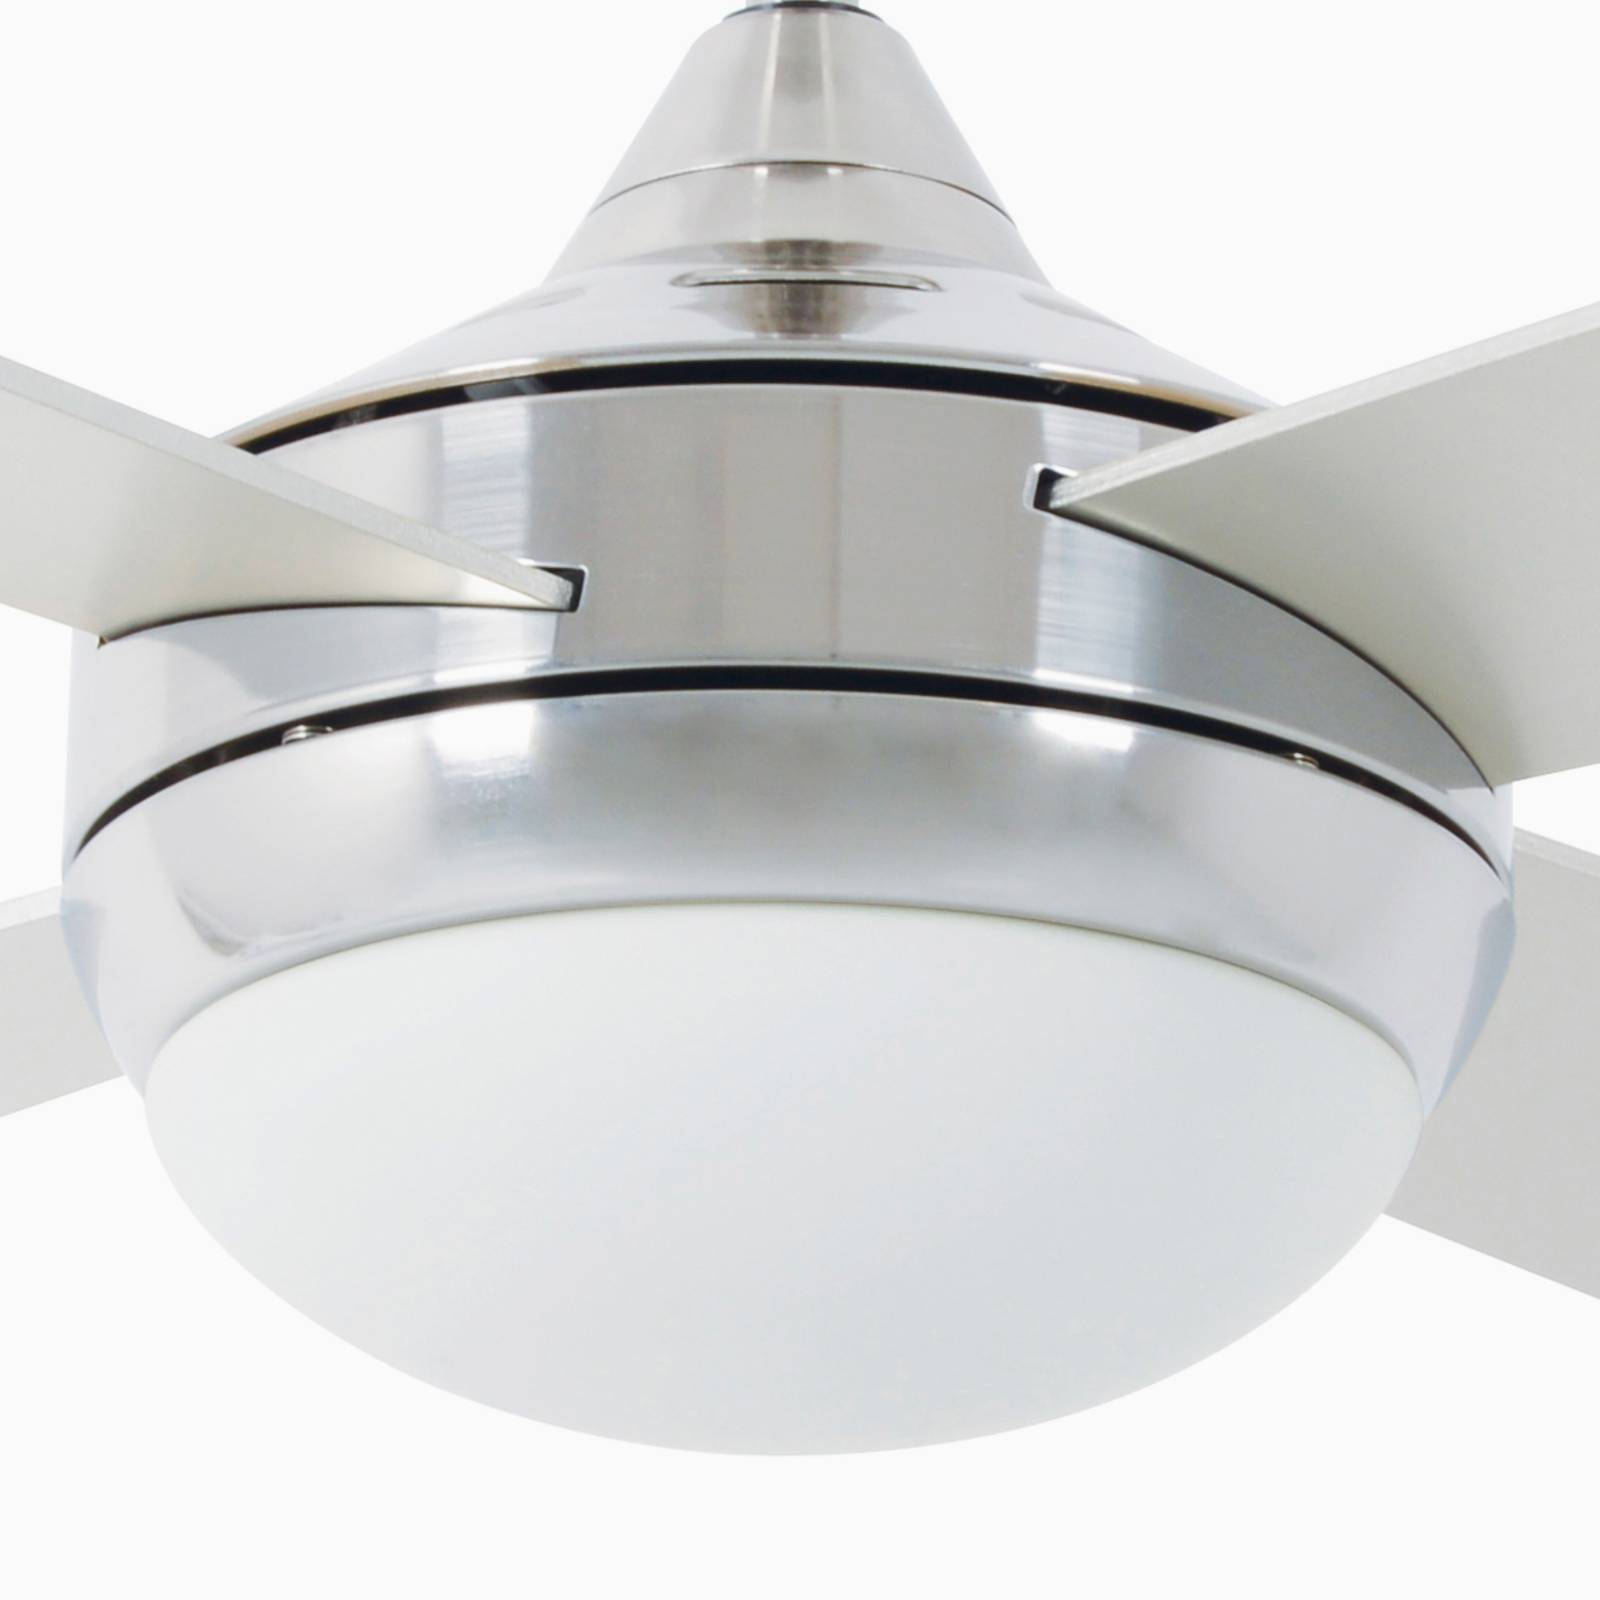 FARO BARCELONA Ventilateur de plafond Icaria L avec lumière alu/gris/érable